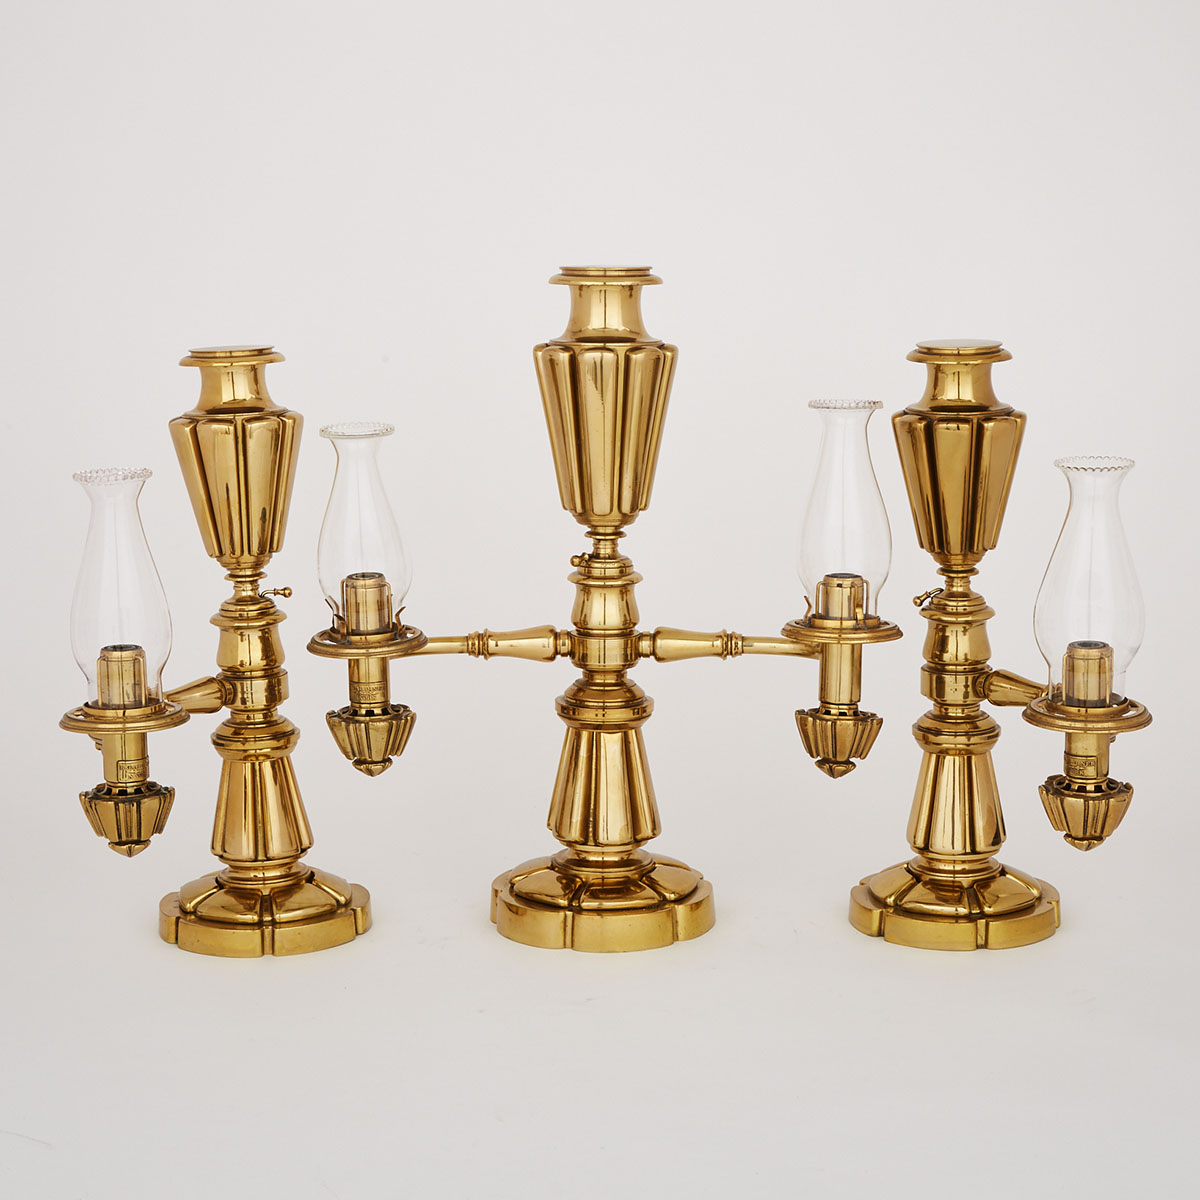 Set of Three American Lacquered Brass Argand Lamps, Baldwin Gardiner, New York, c.1830